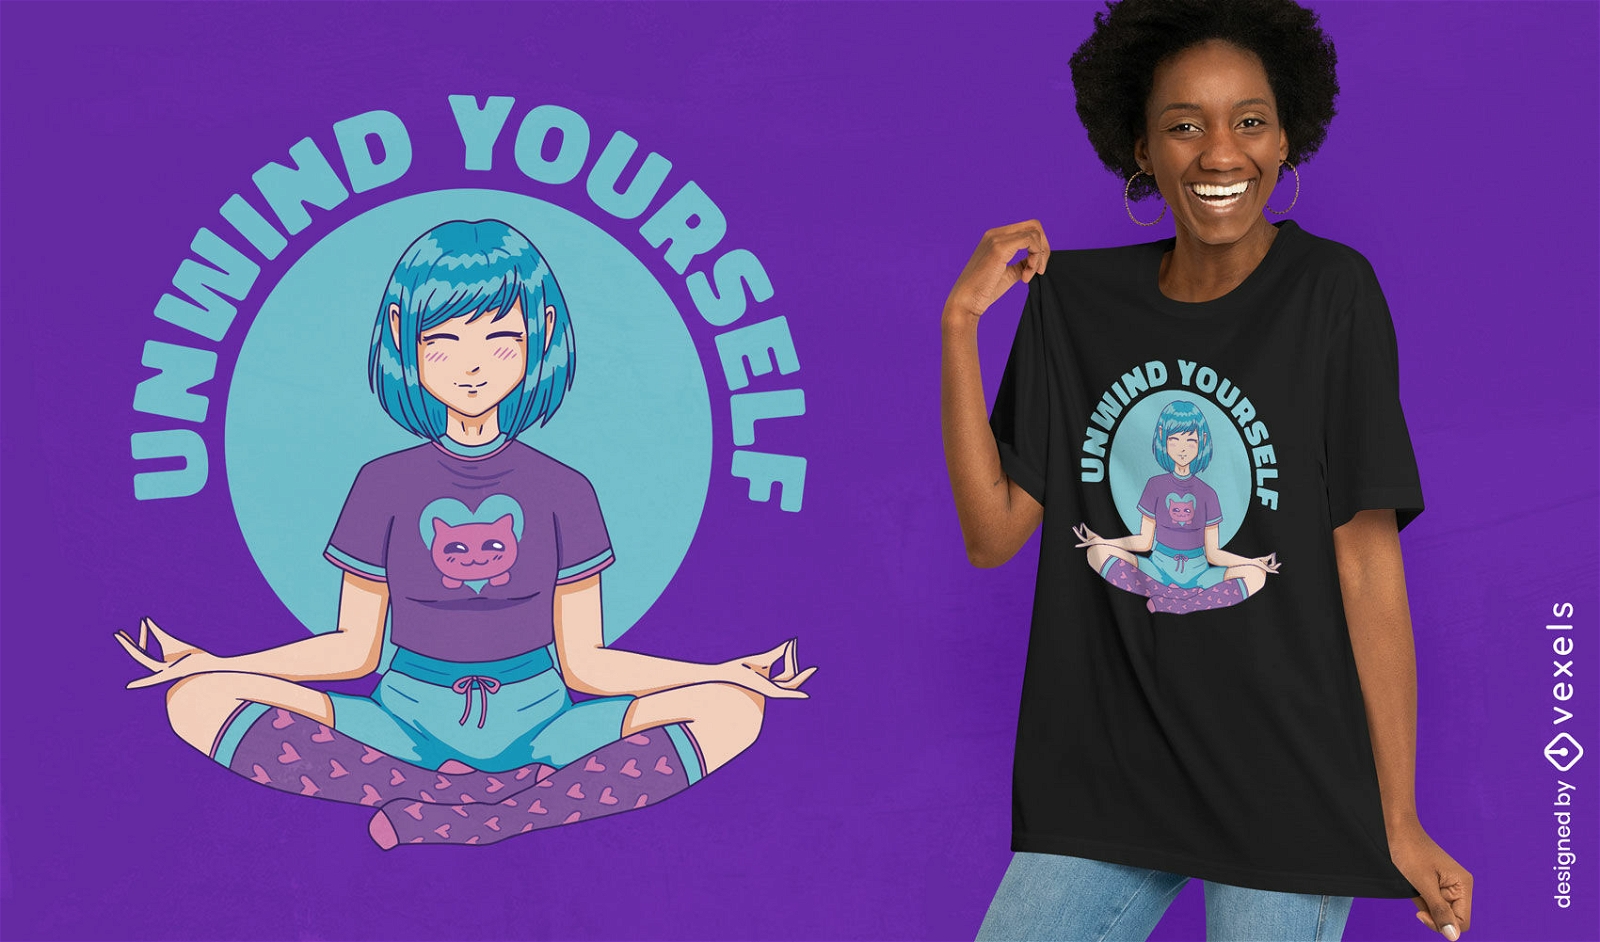 Unwind yourself meditation anime t-shirt design